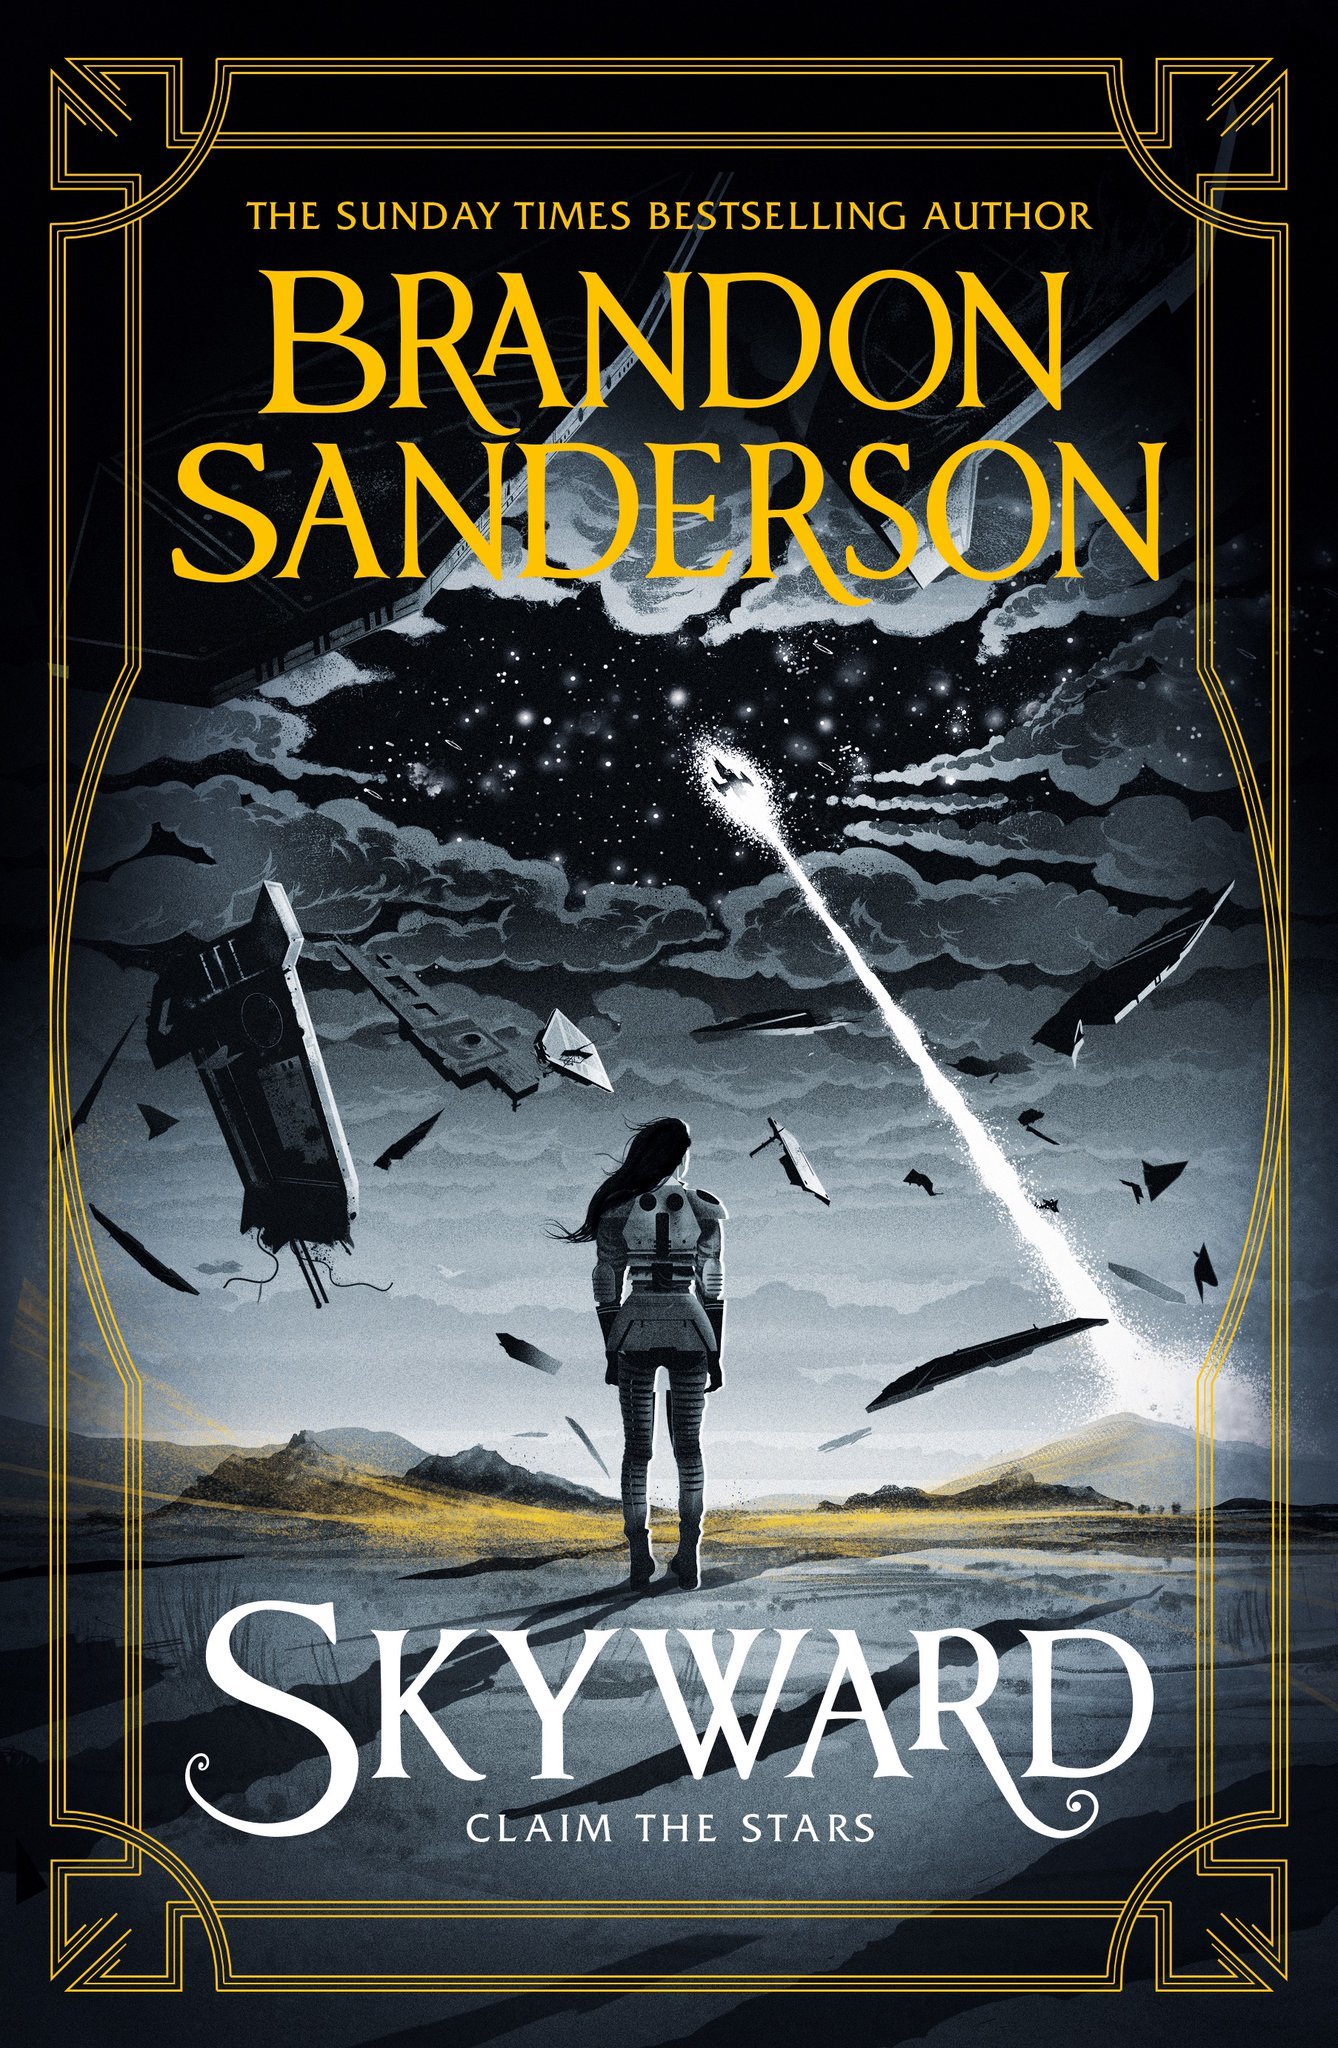 Skyward Series (2008-present), Brandon Sanderson Wiki